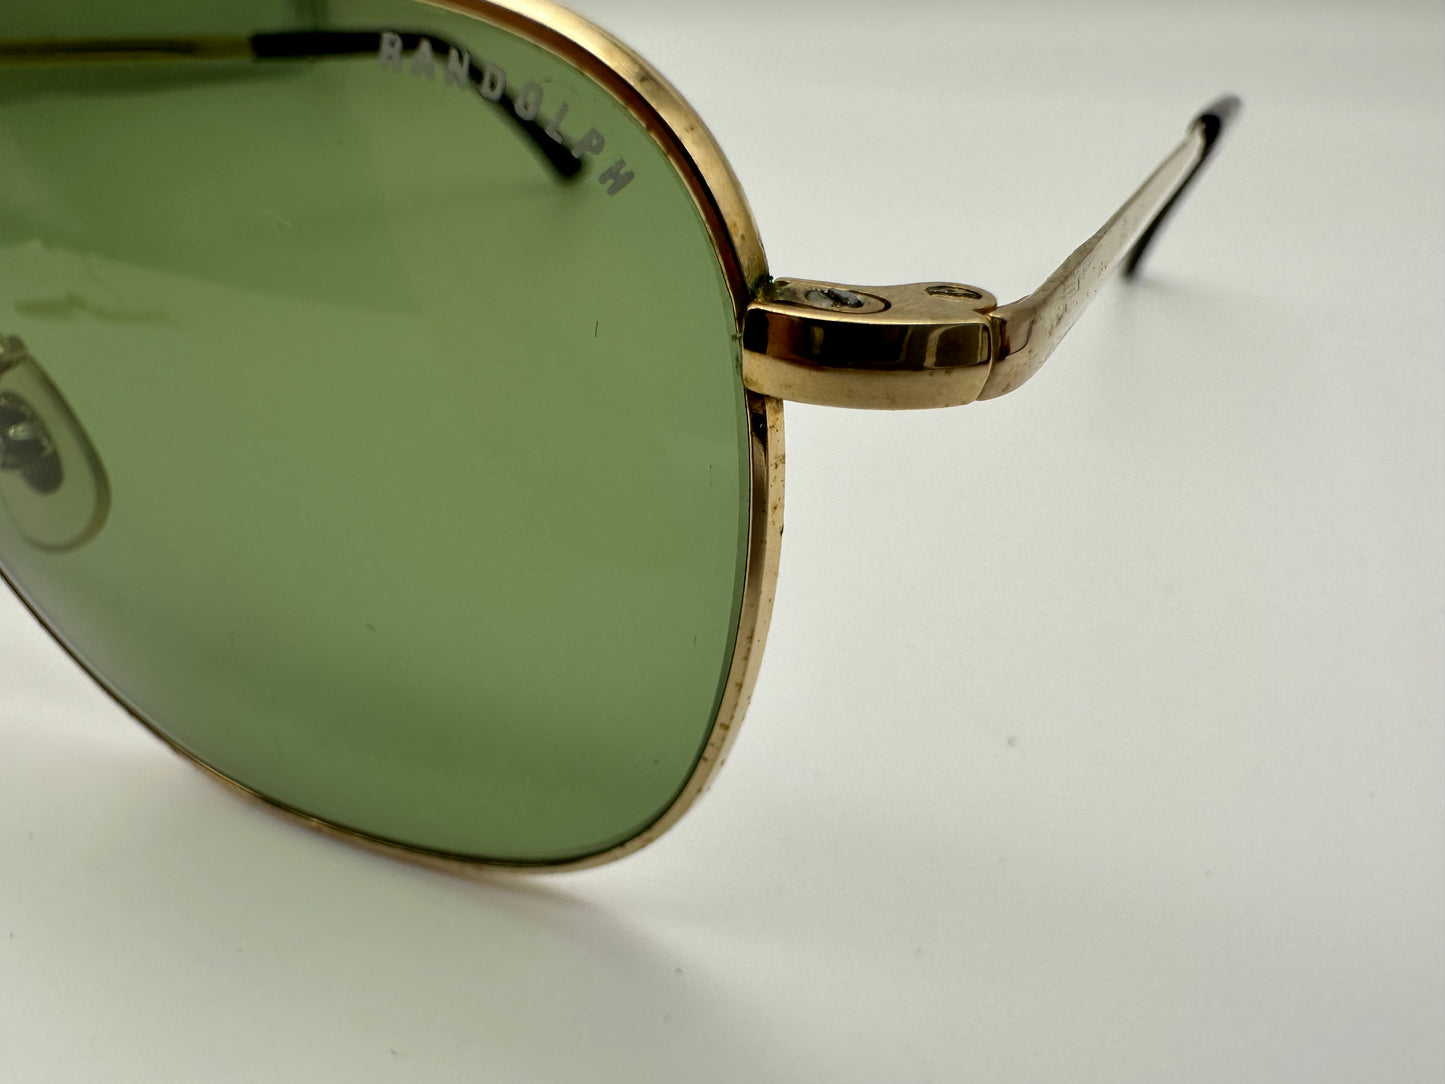 Rare Vintage Randolph Engineering 1990s 55mm Gold Green sunglasses